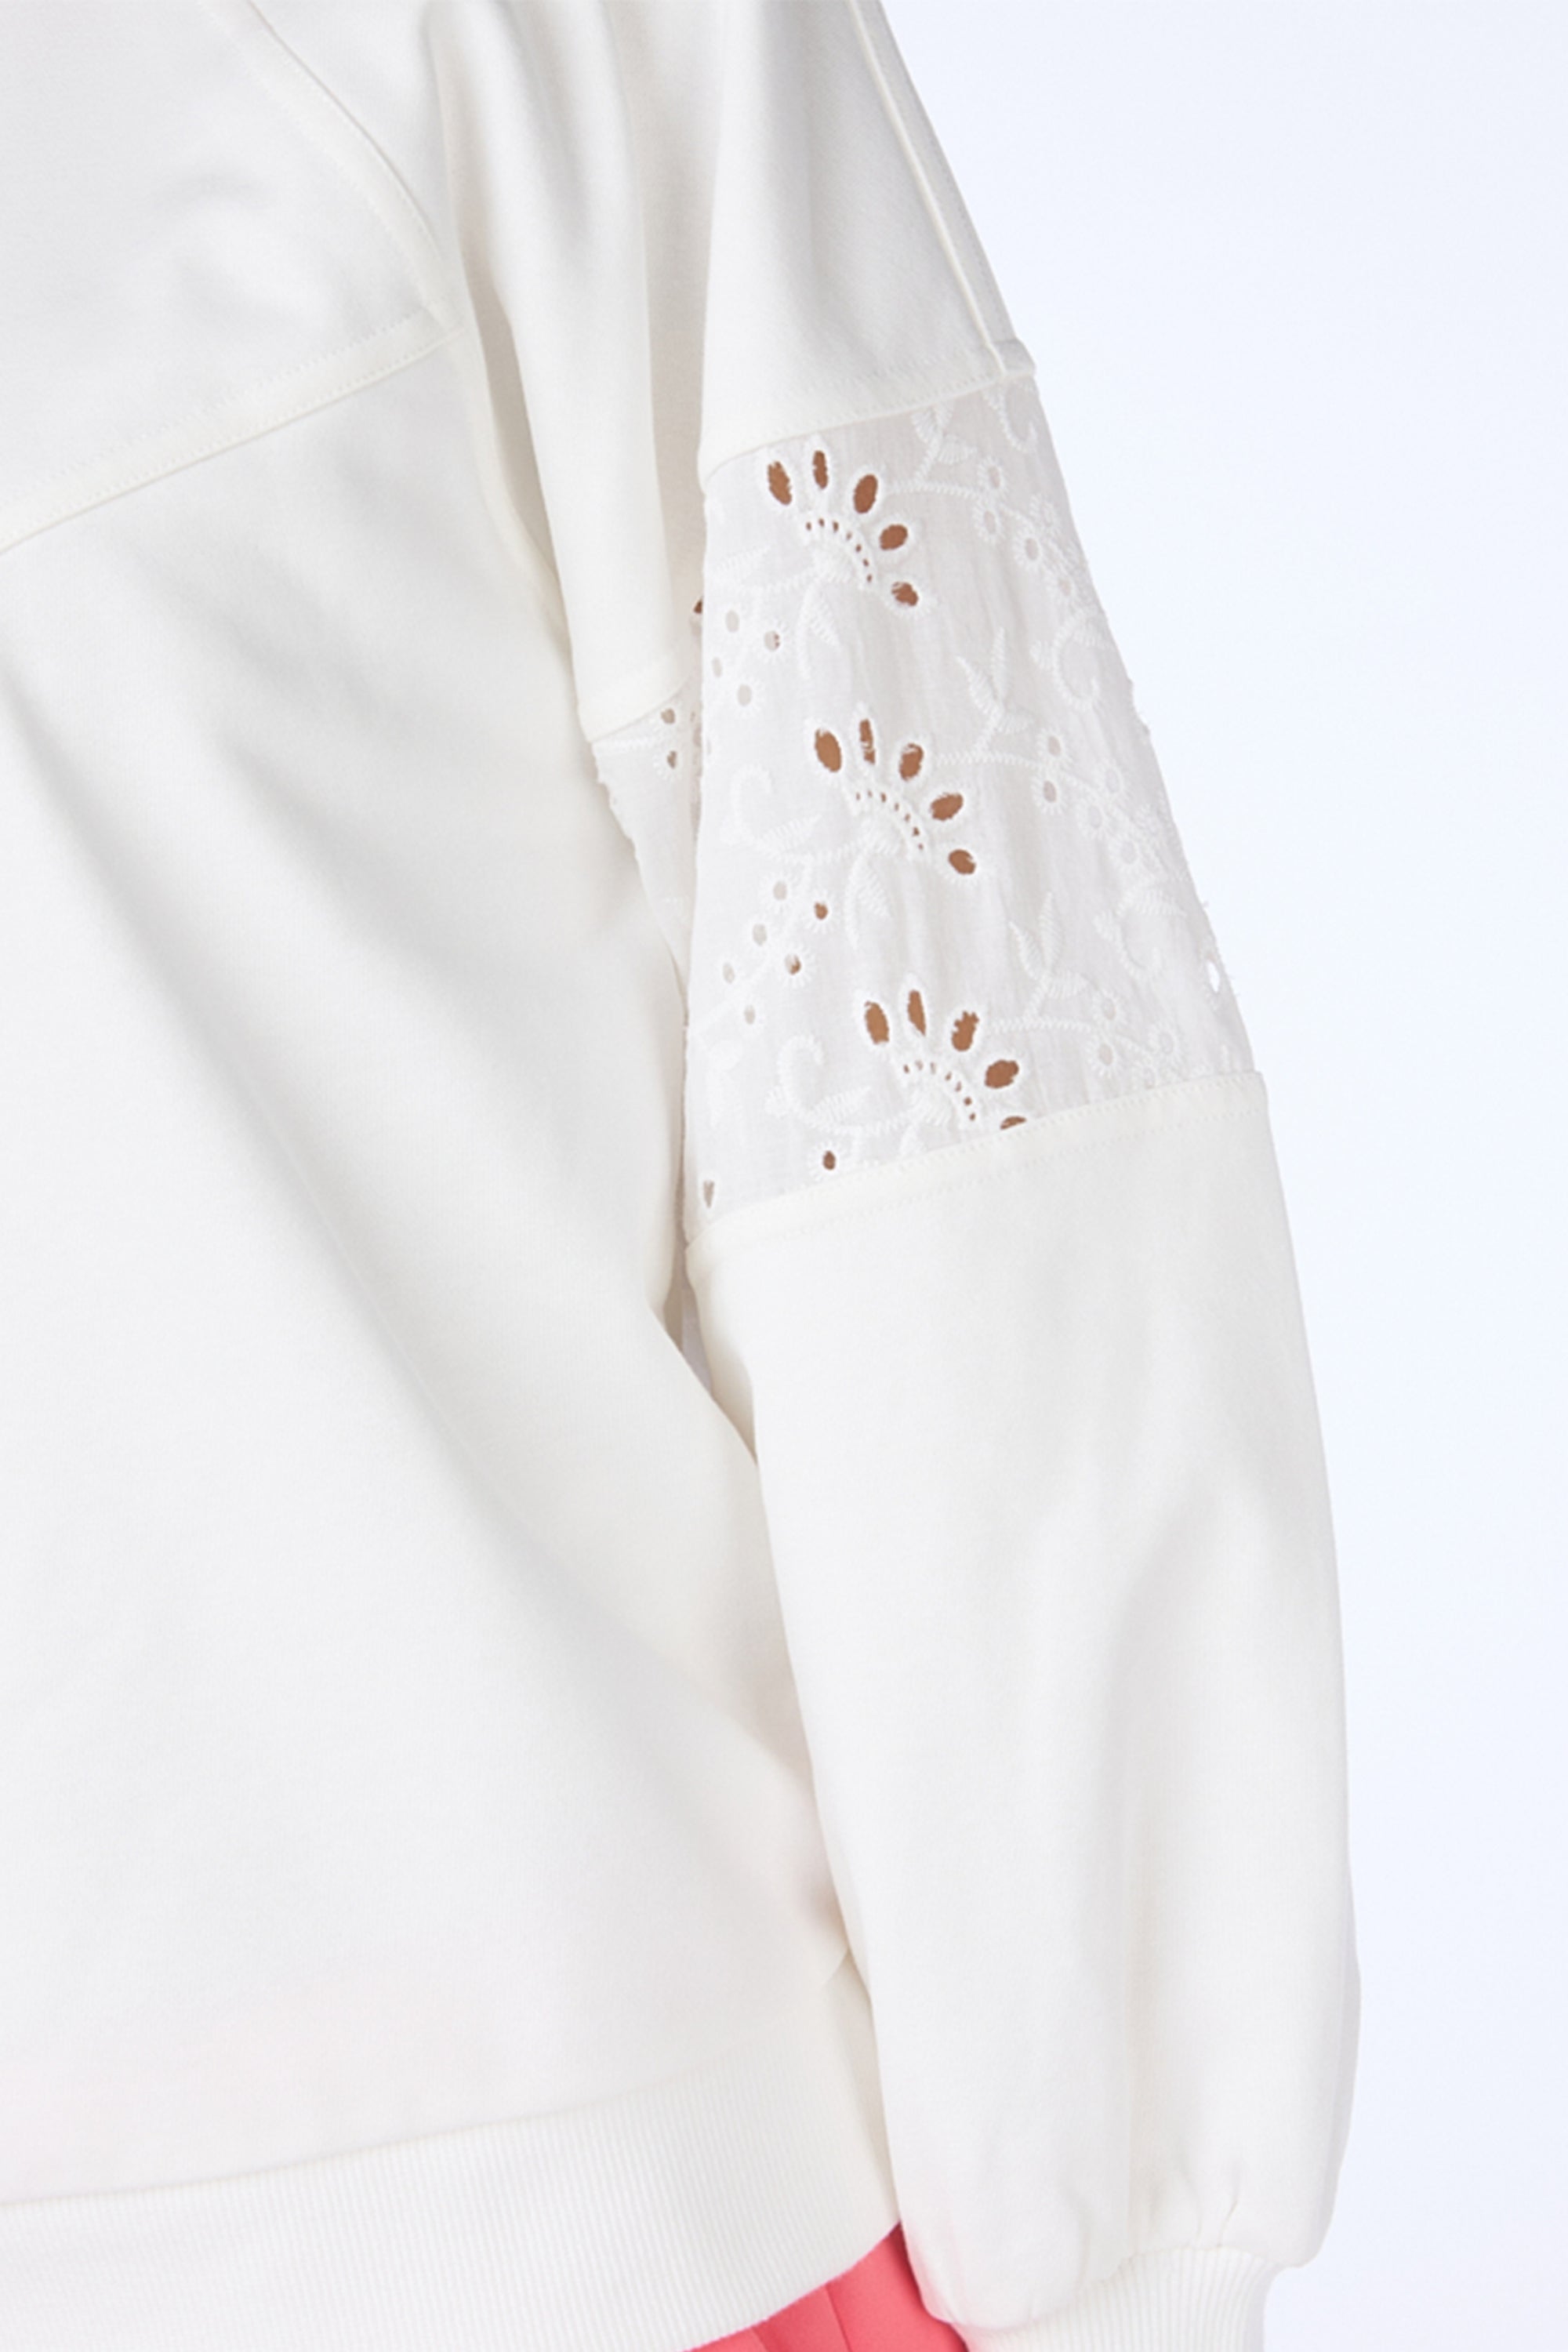 Sleeve close up on Esqualo ( SP2405016) Women's Long Sleeve Sweatshirt With Eyelet Lace Sleeve Detail in White